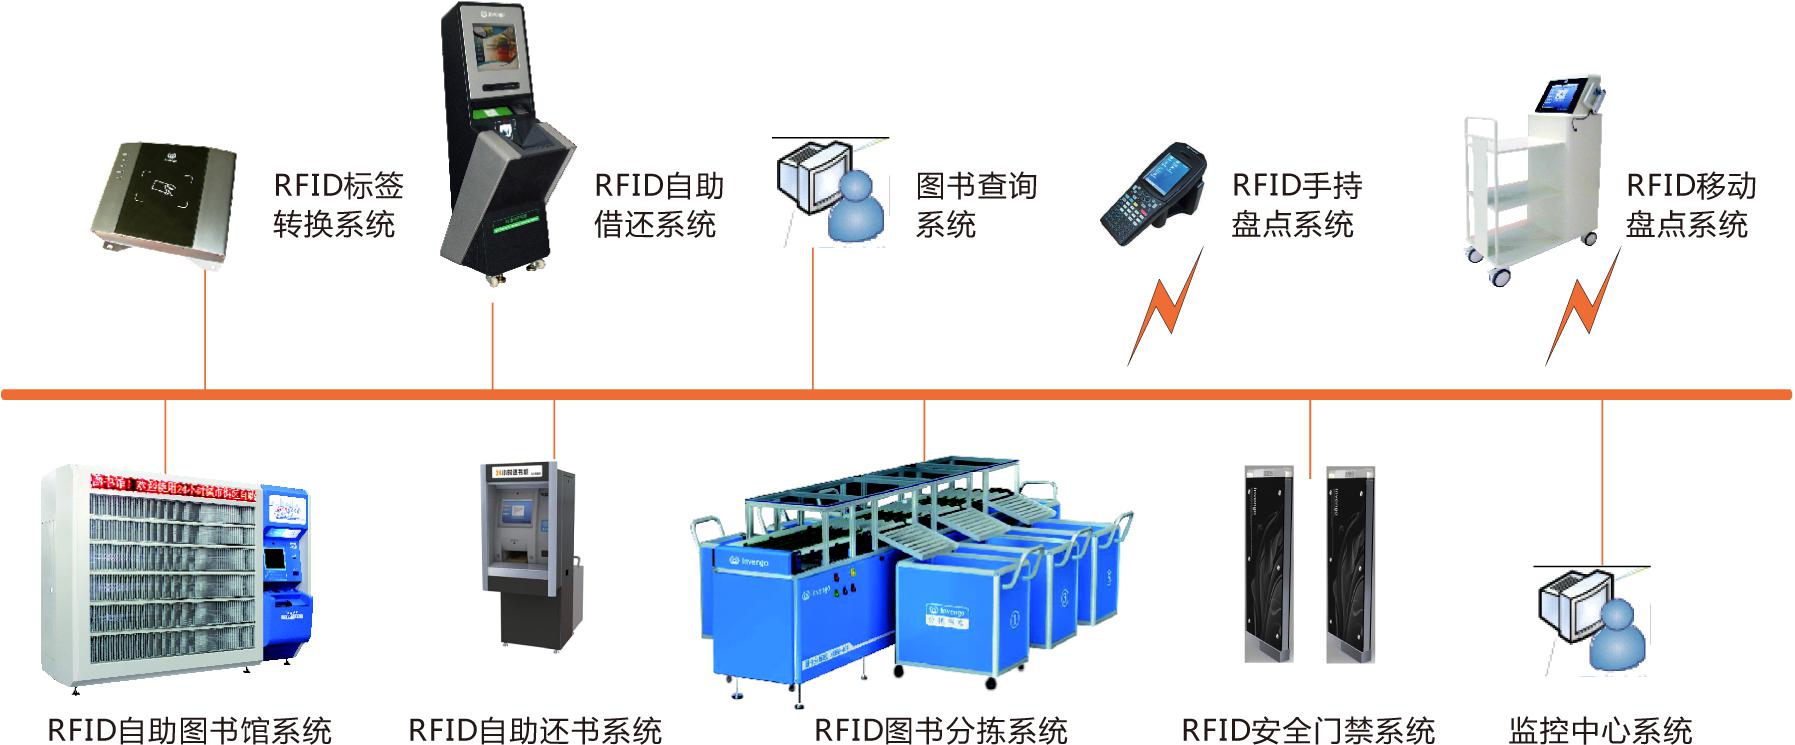 rfid射频识别系统